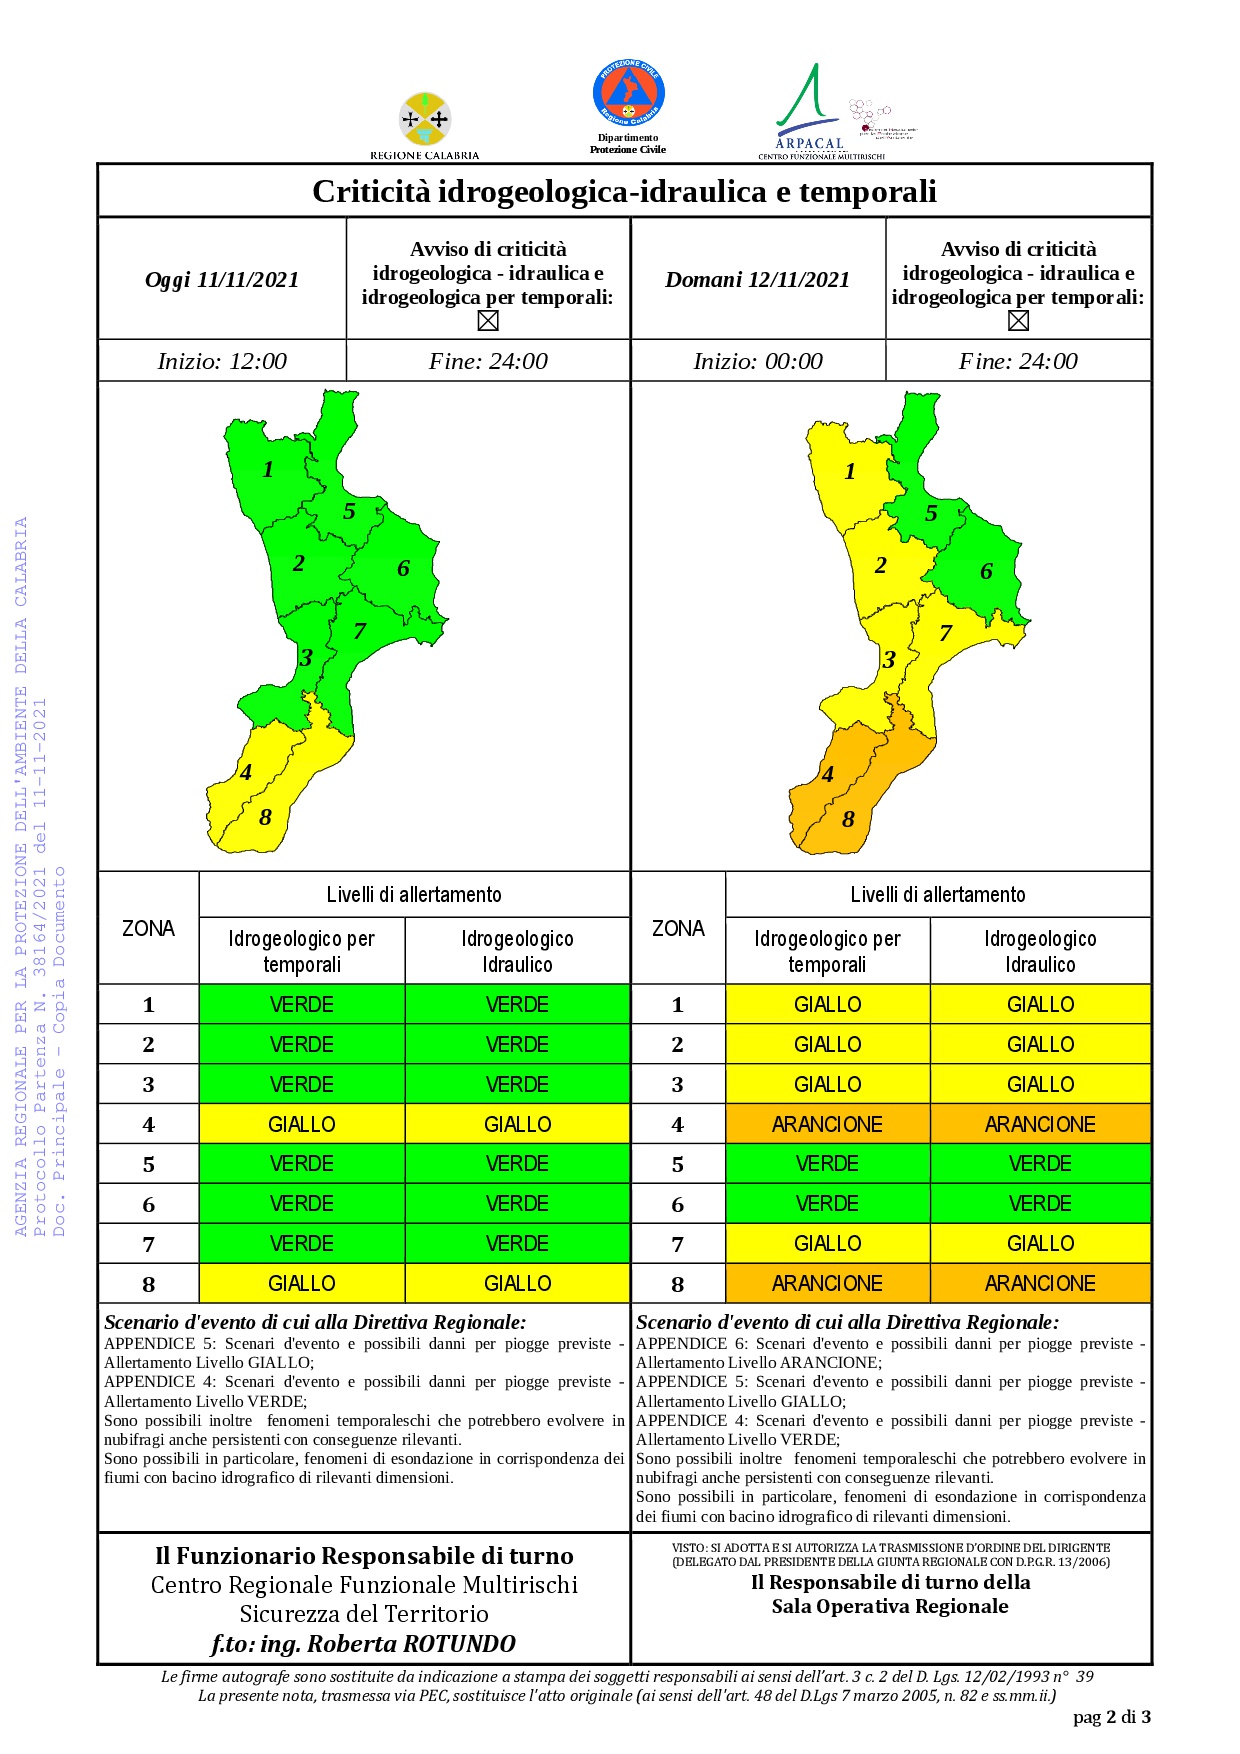 Criticità idrogeologica-idraulica e temporali in Calabria 11-11-2021